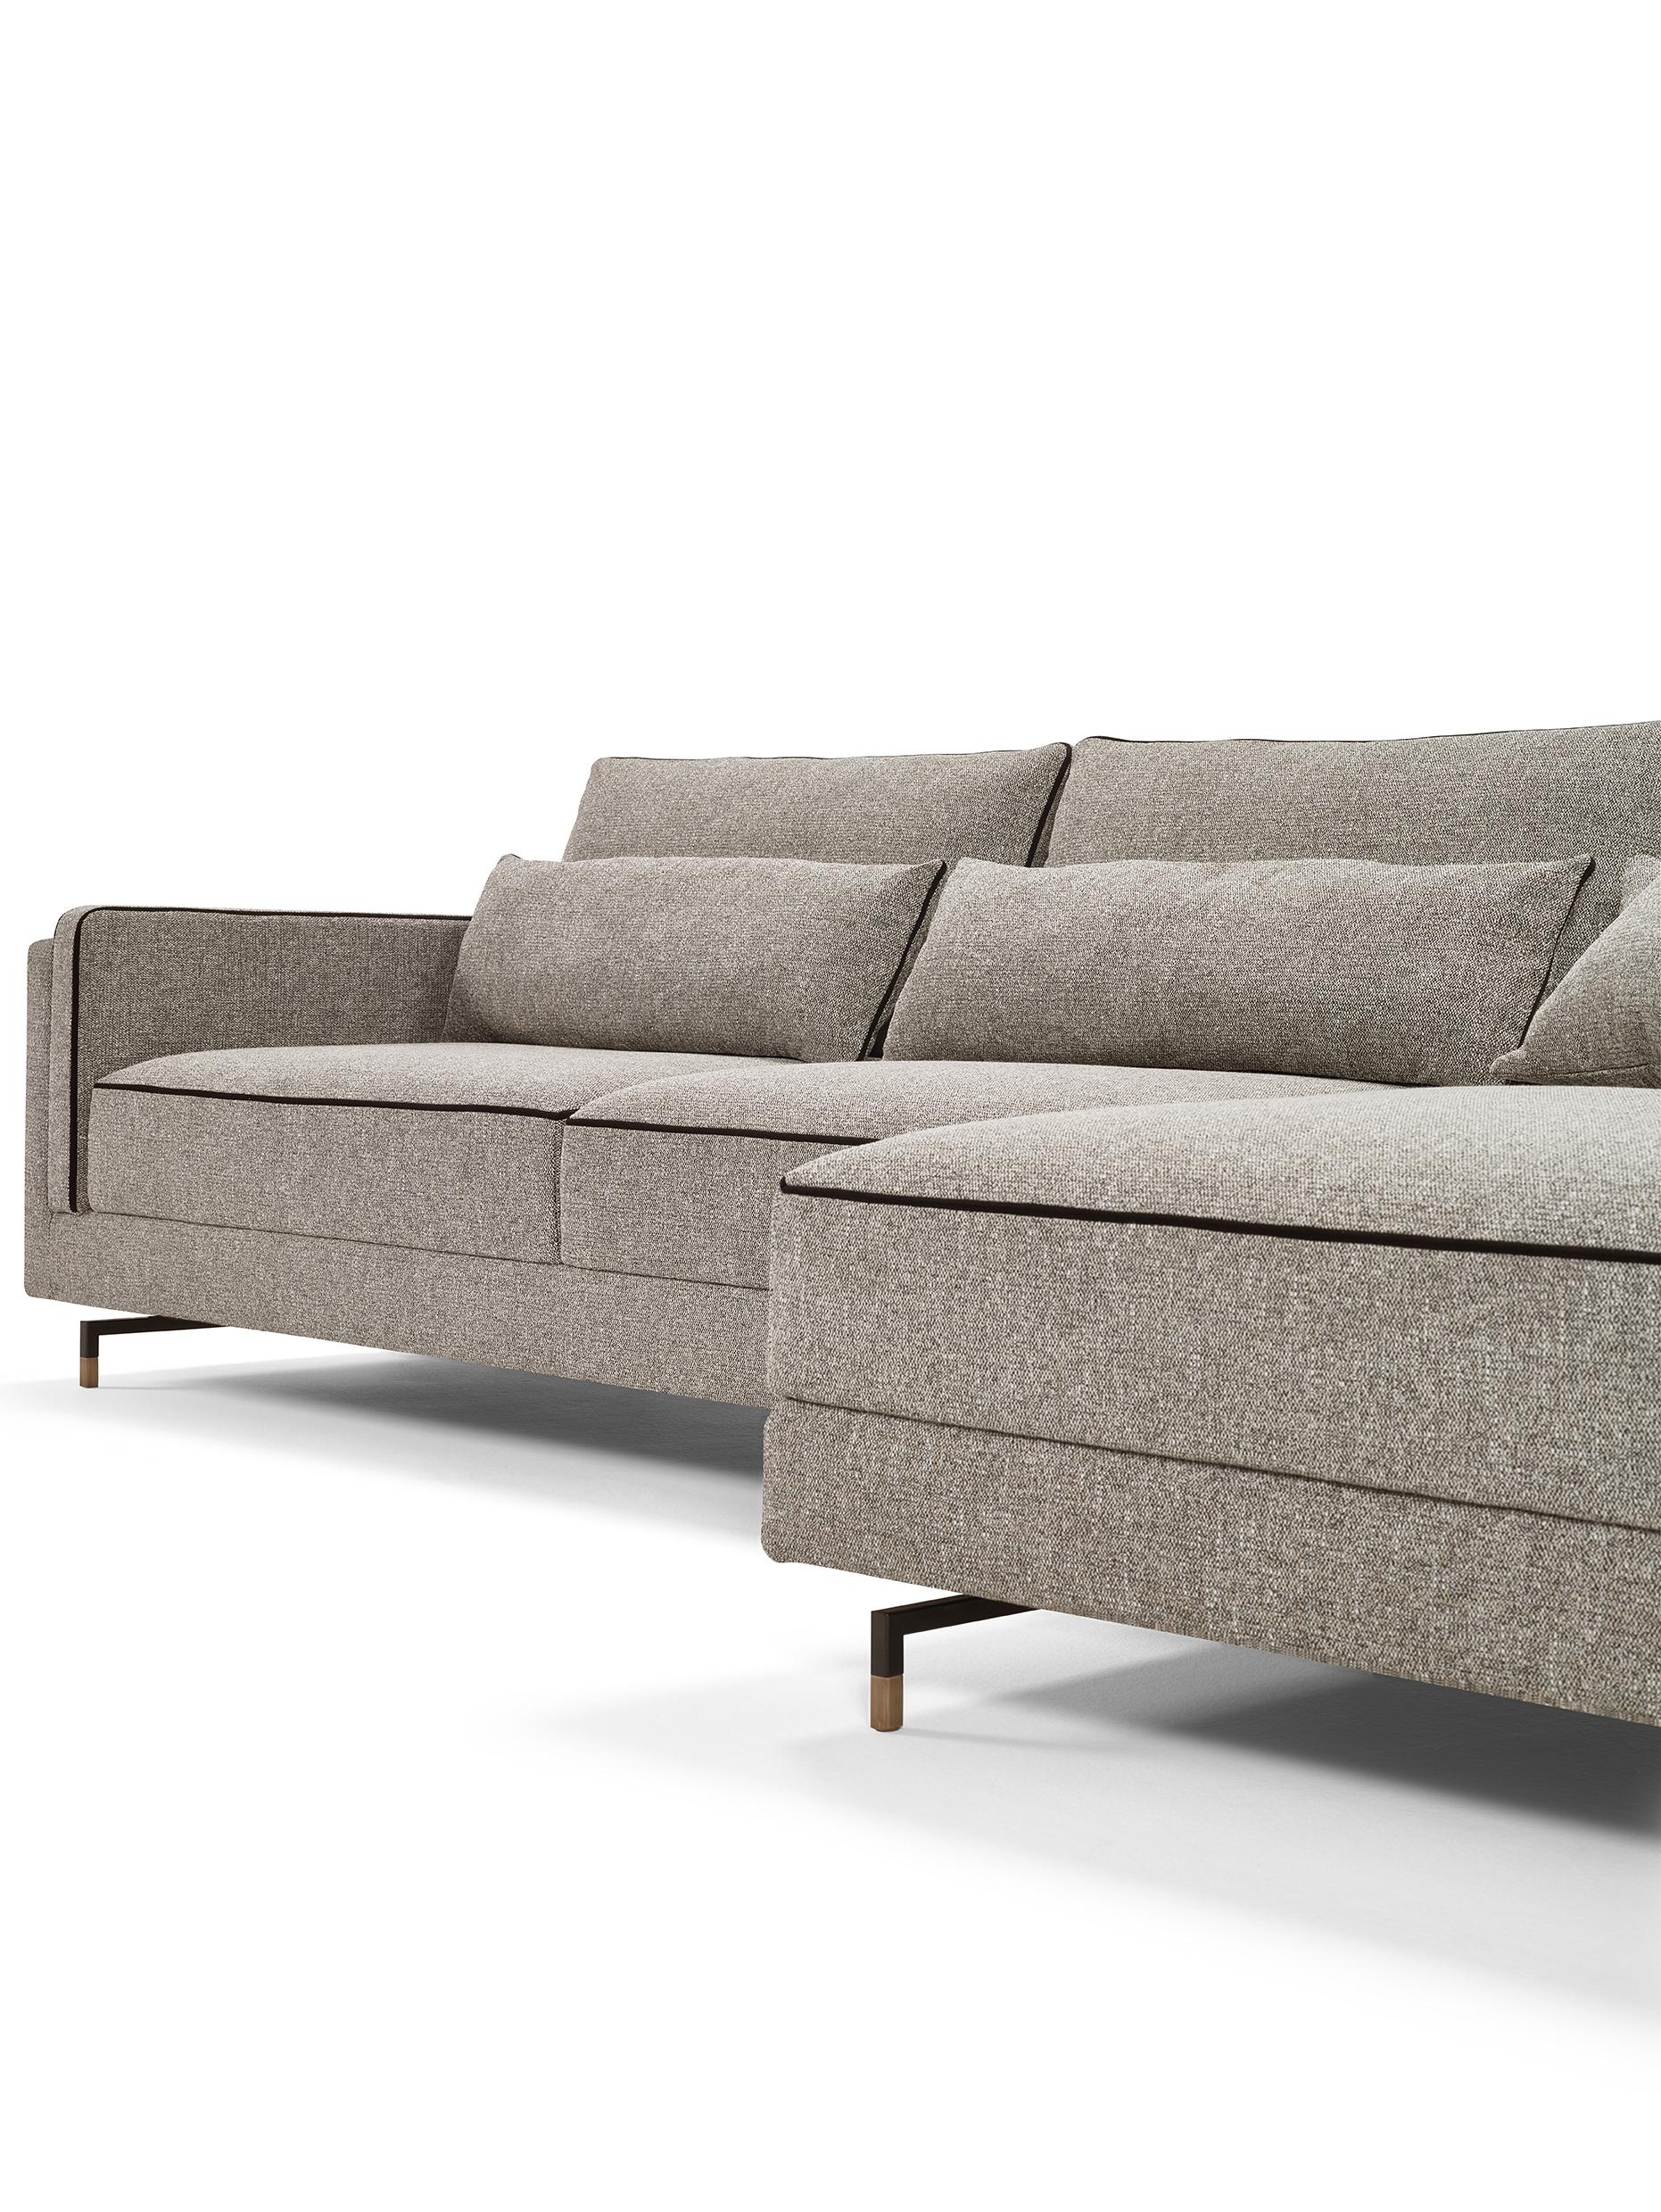 Contemporary SINATRA Chaise-Longue Sofa For Sale